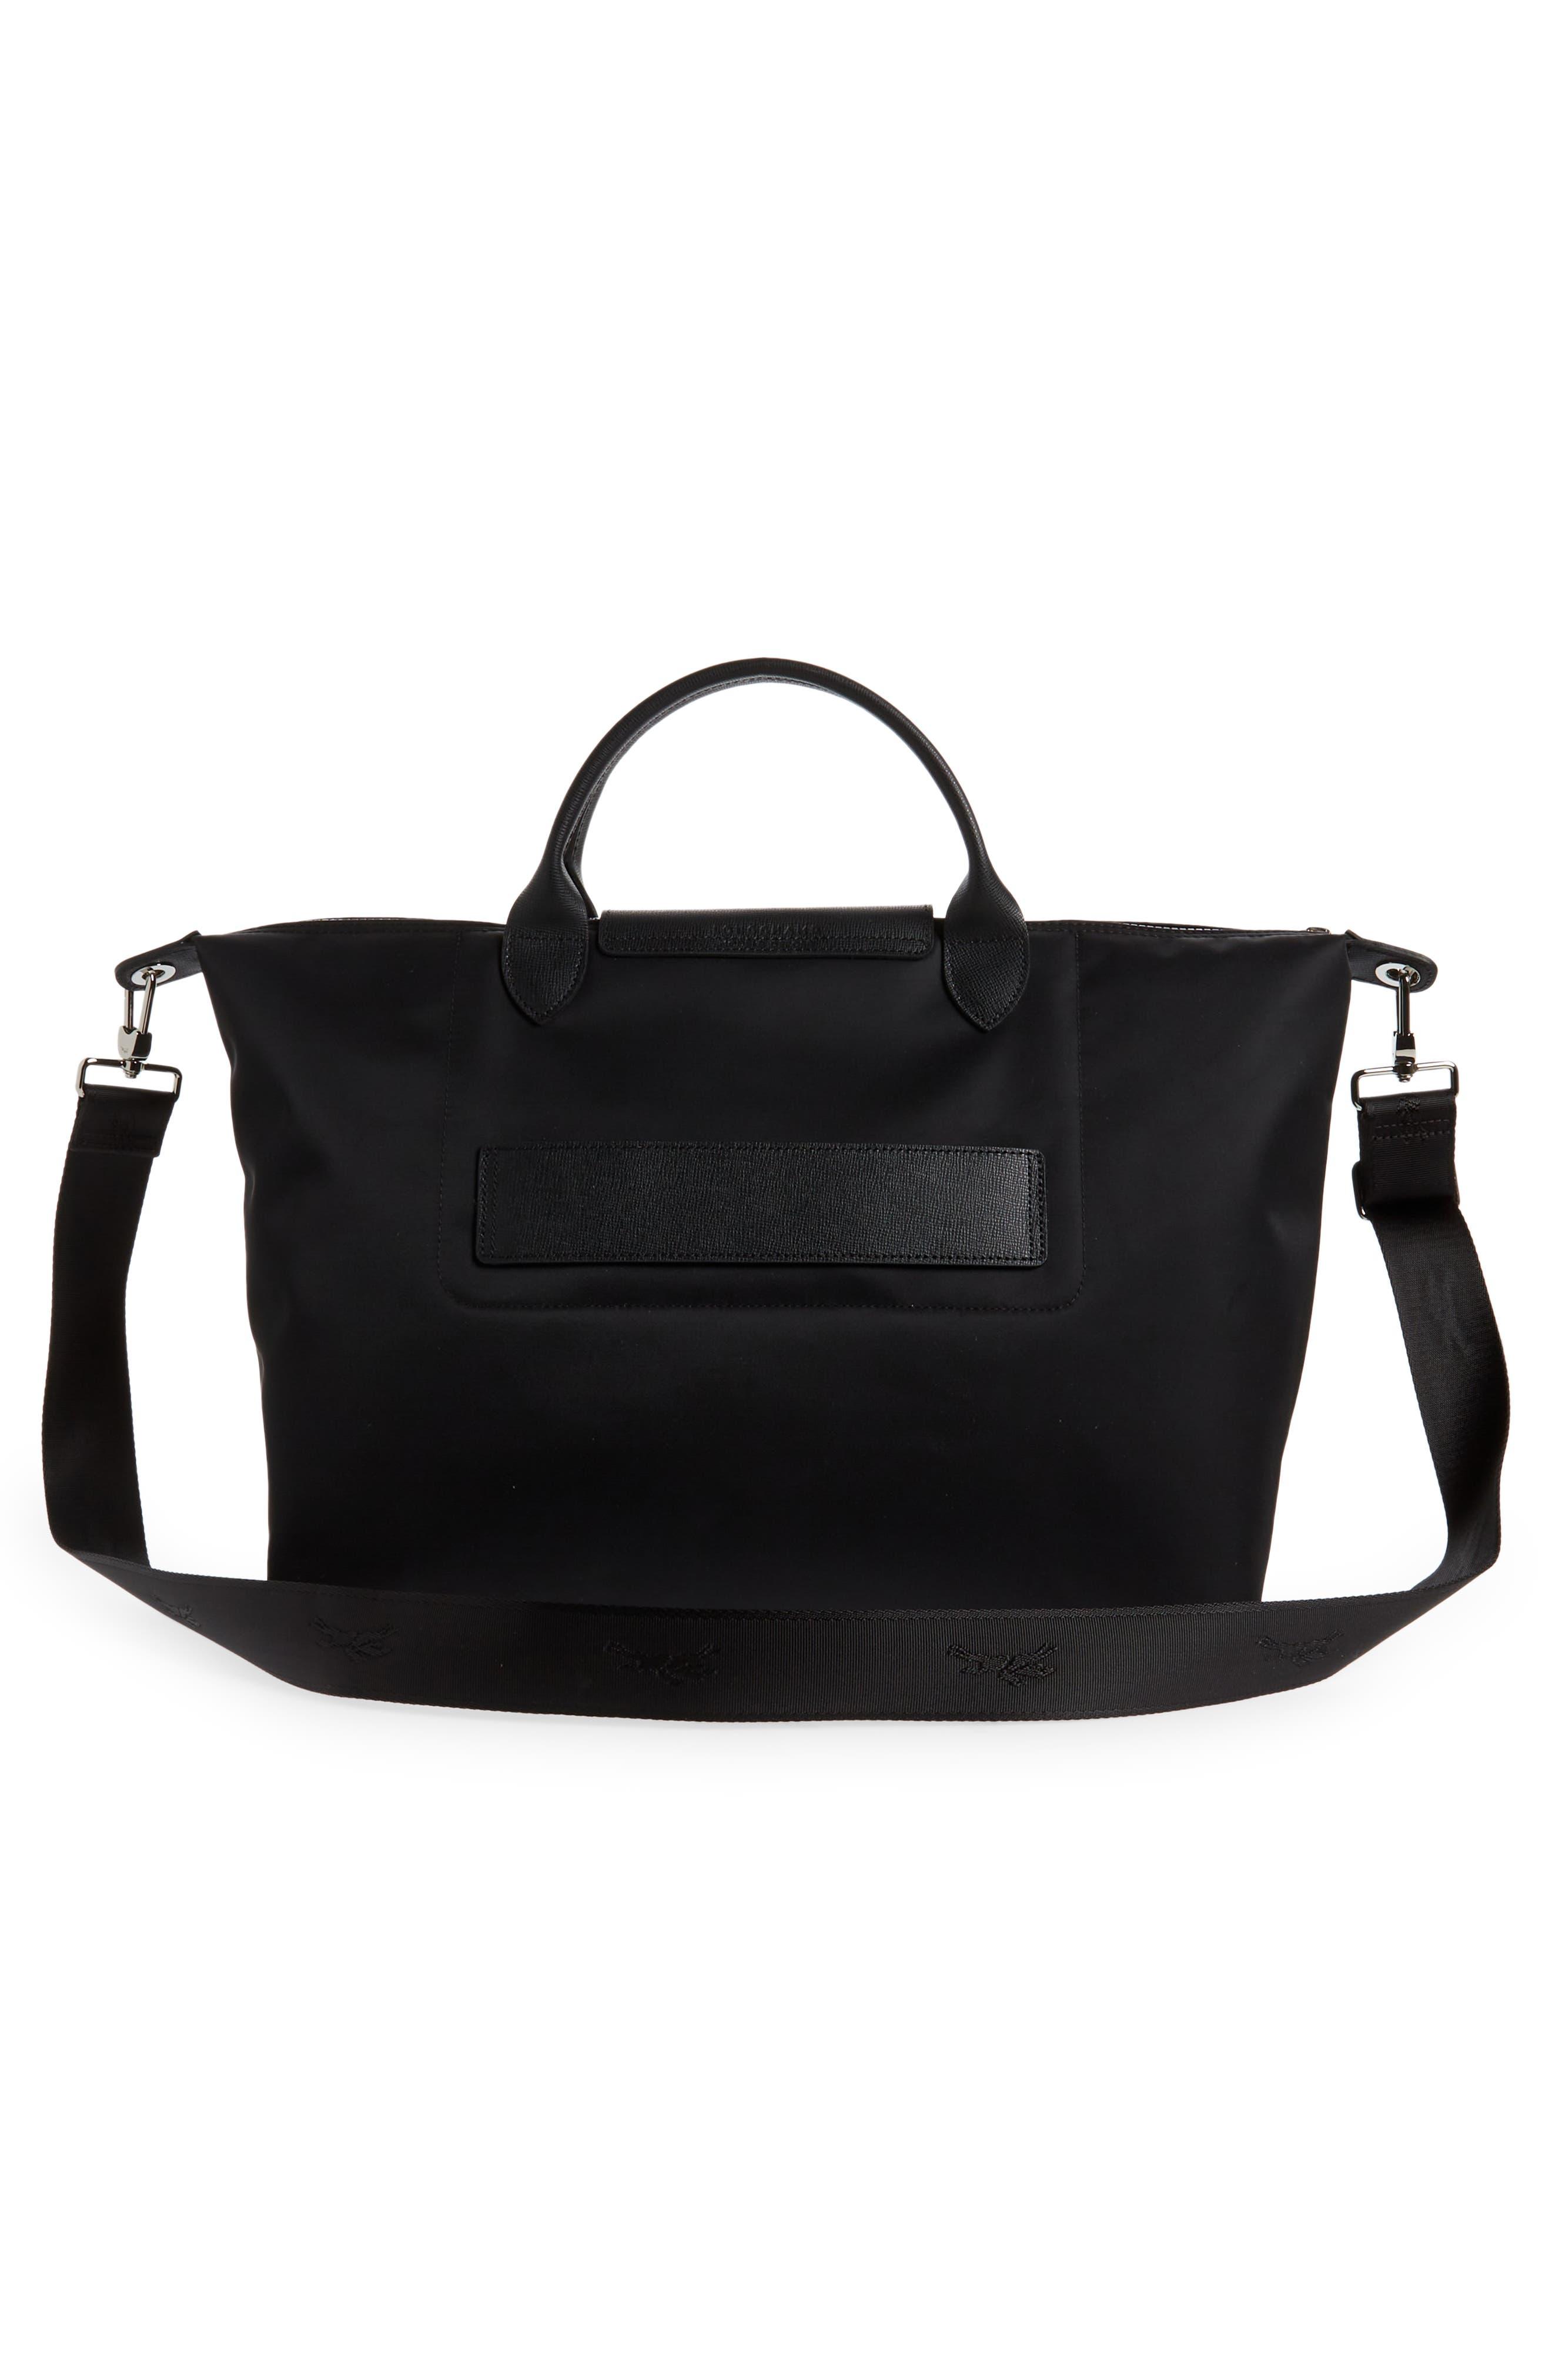 Longchamp Large Le Pliage Neo Travel Bag in Black | Lyst